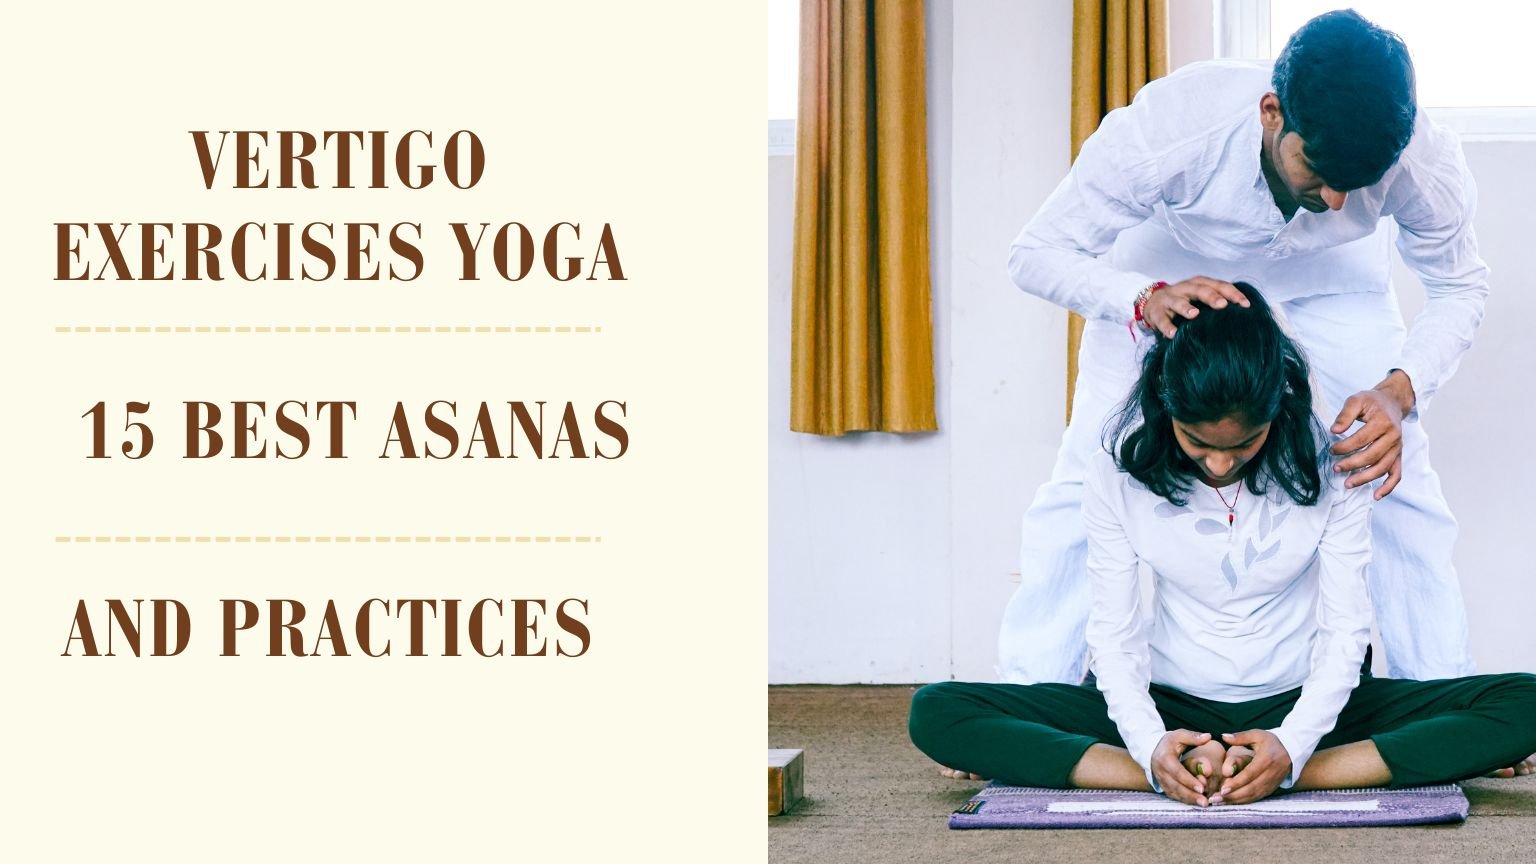 Yoga for vertigo? These asanas can come to your rescue